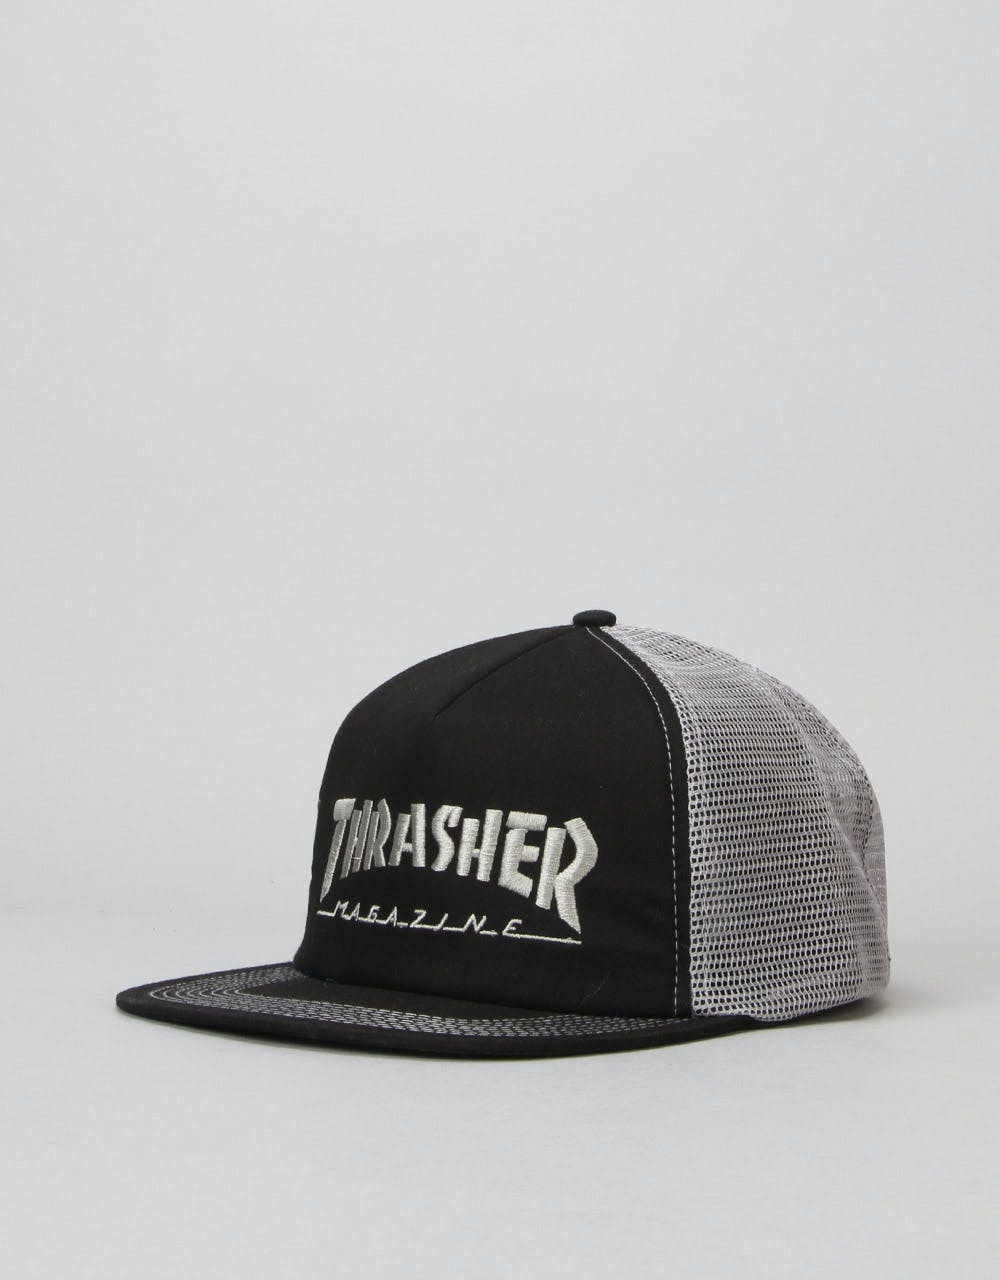 Thrasher Magazine Logo Mesh Snapback Cap - Black/Grey